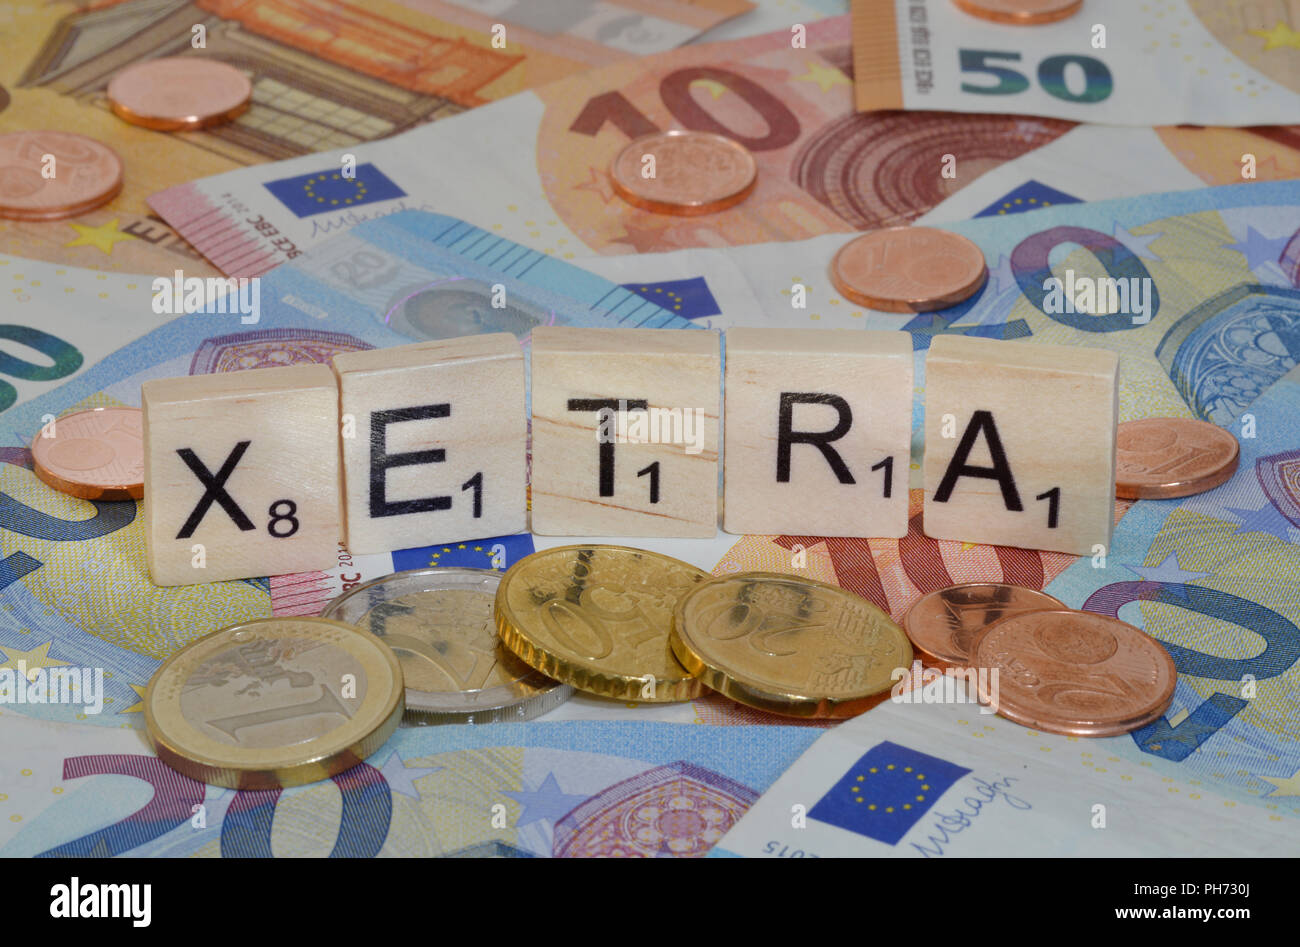 Symbolfoto Wirtschaftsbegriff Xetra Stock Photo